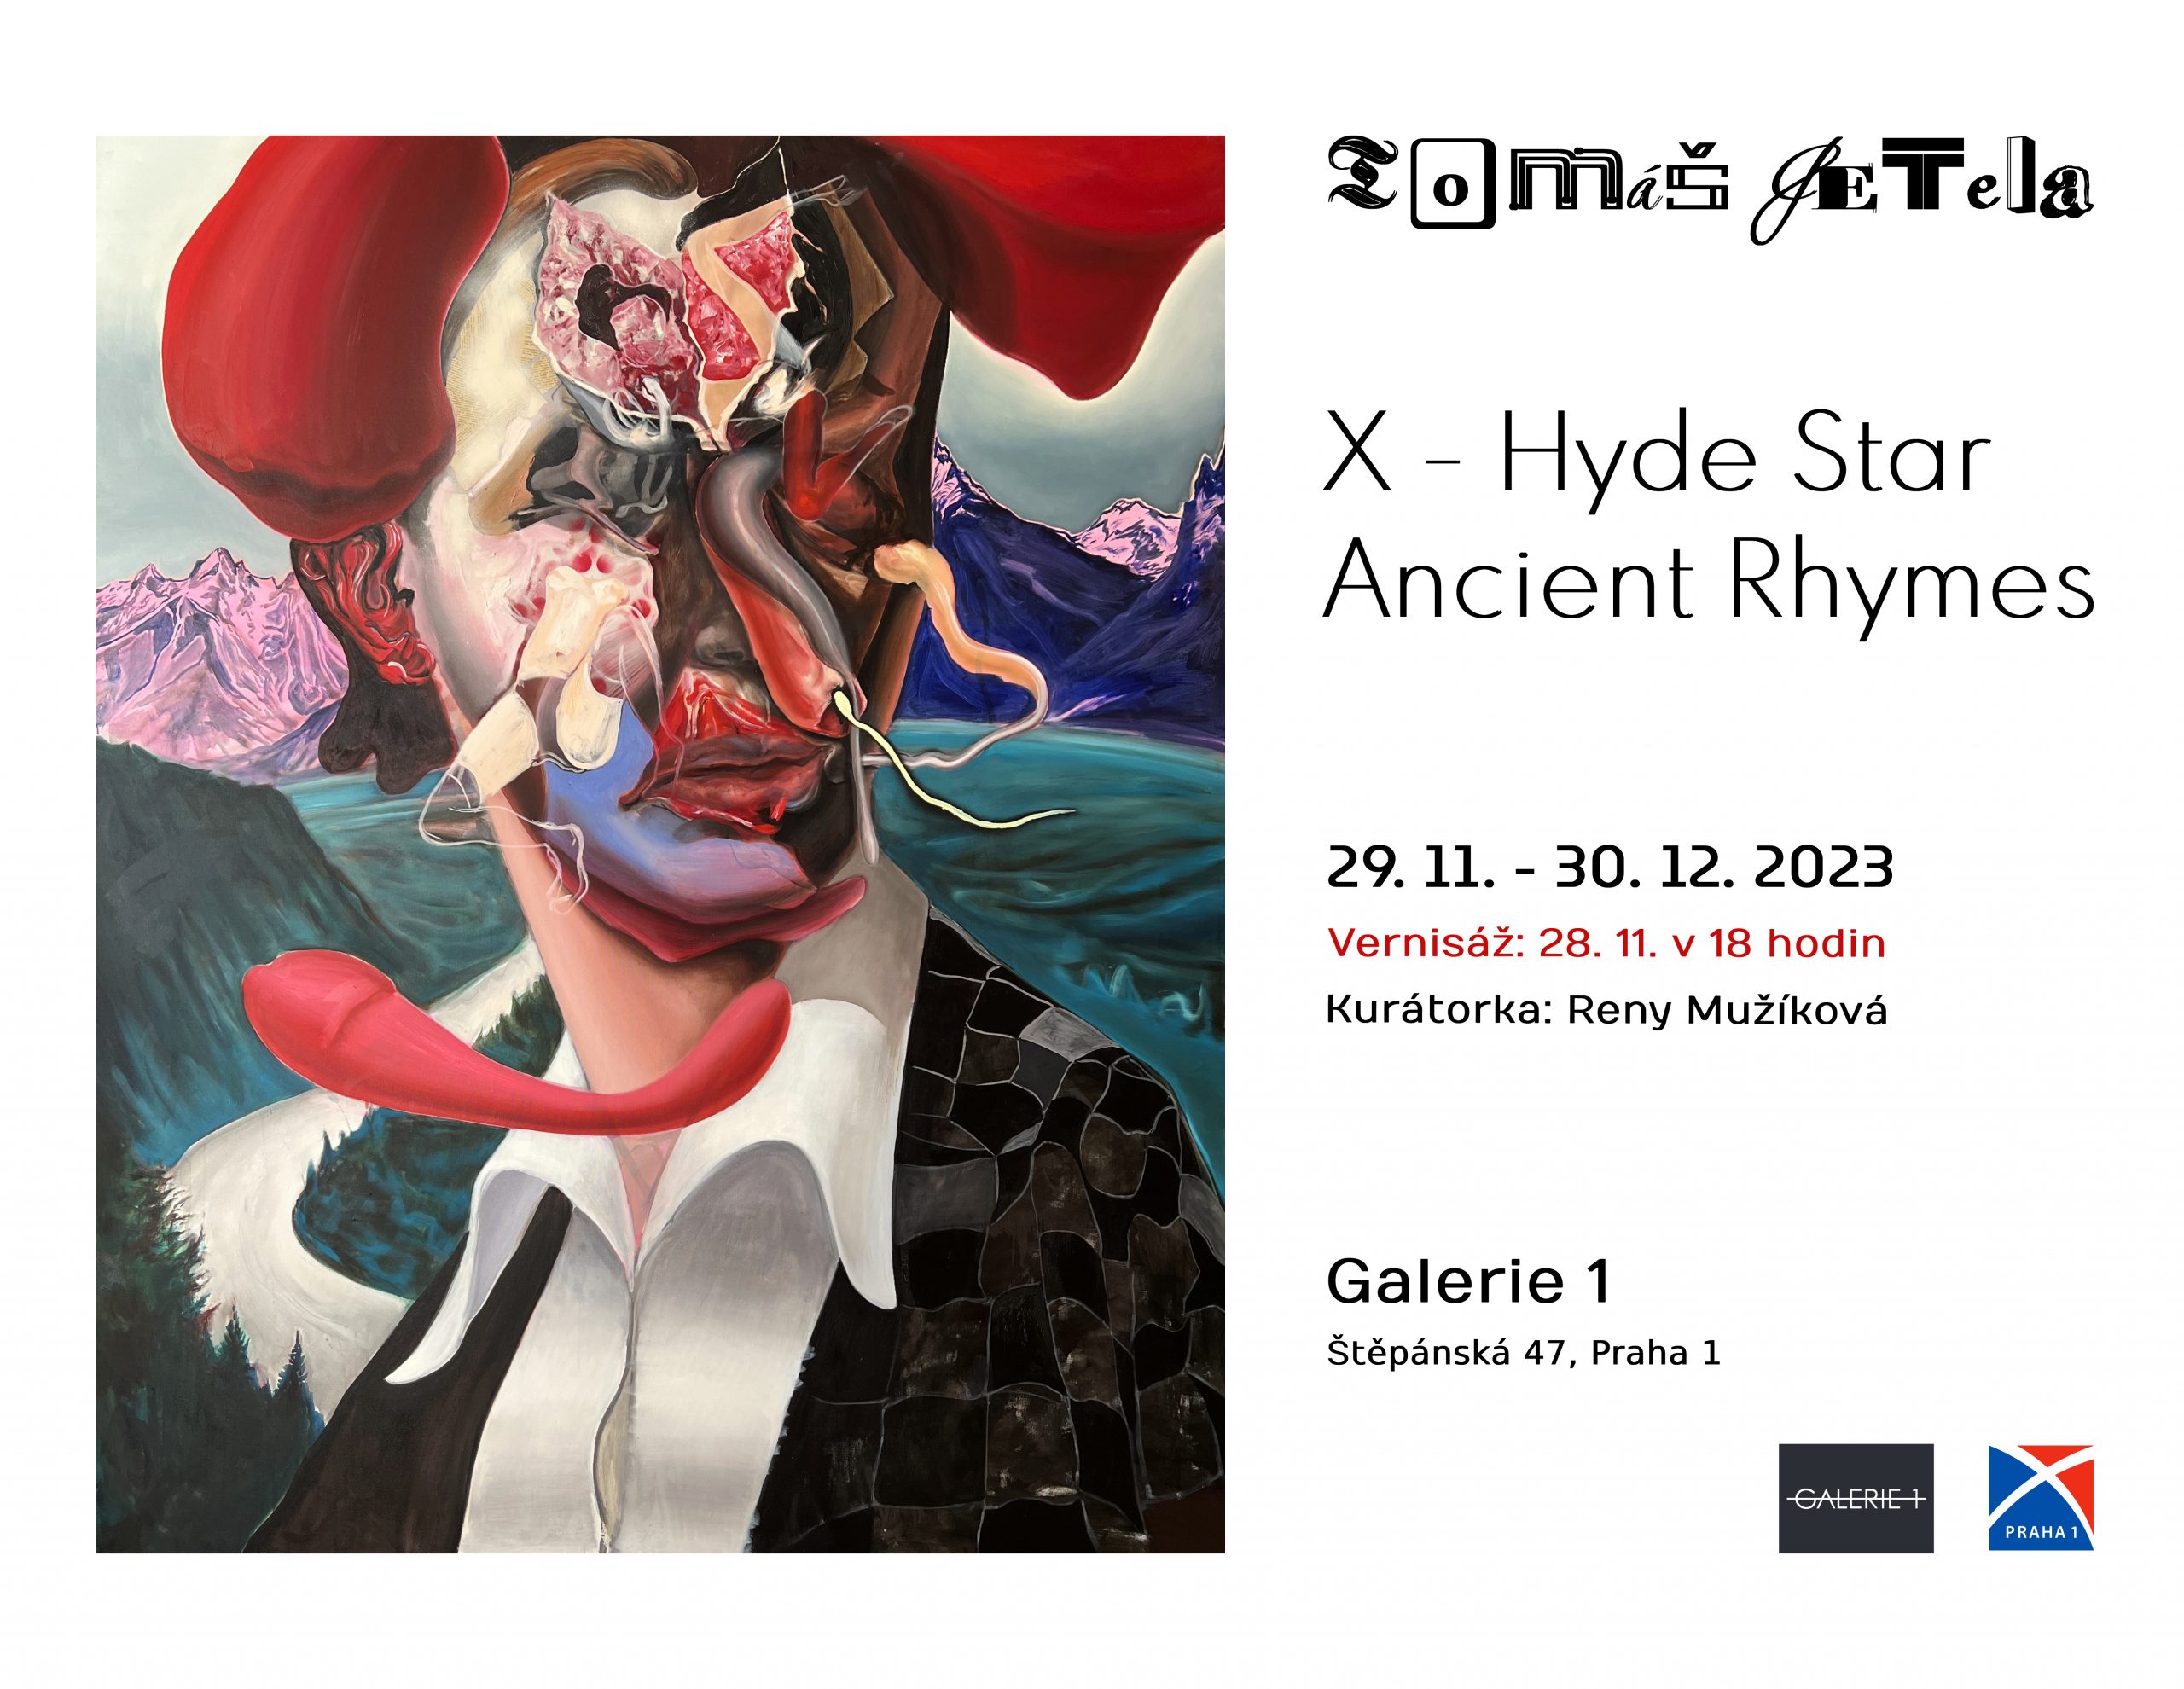 Galerie 1: Tomáš Jetela X-Hyde Star Ancient Rhymes